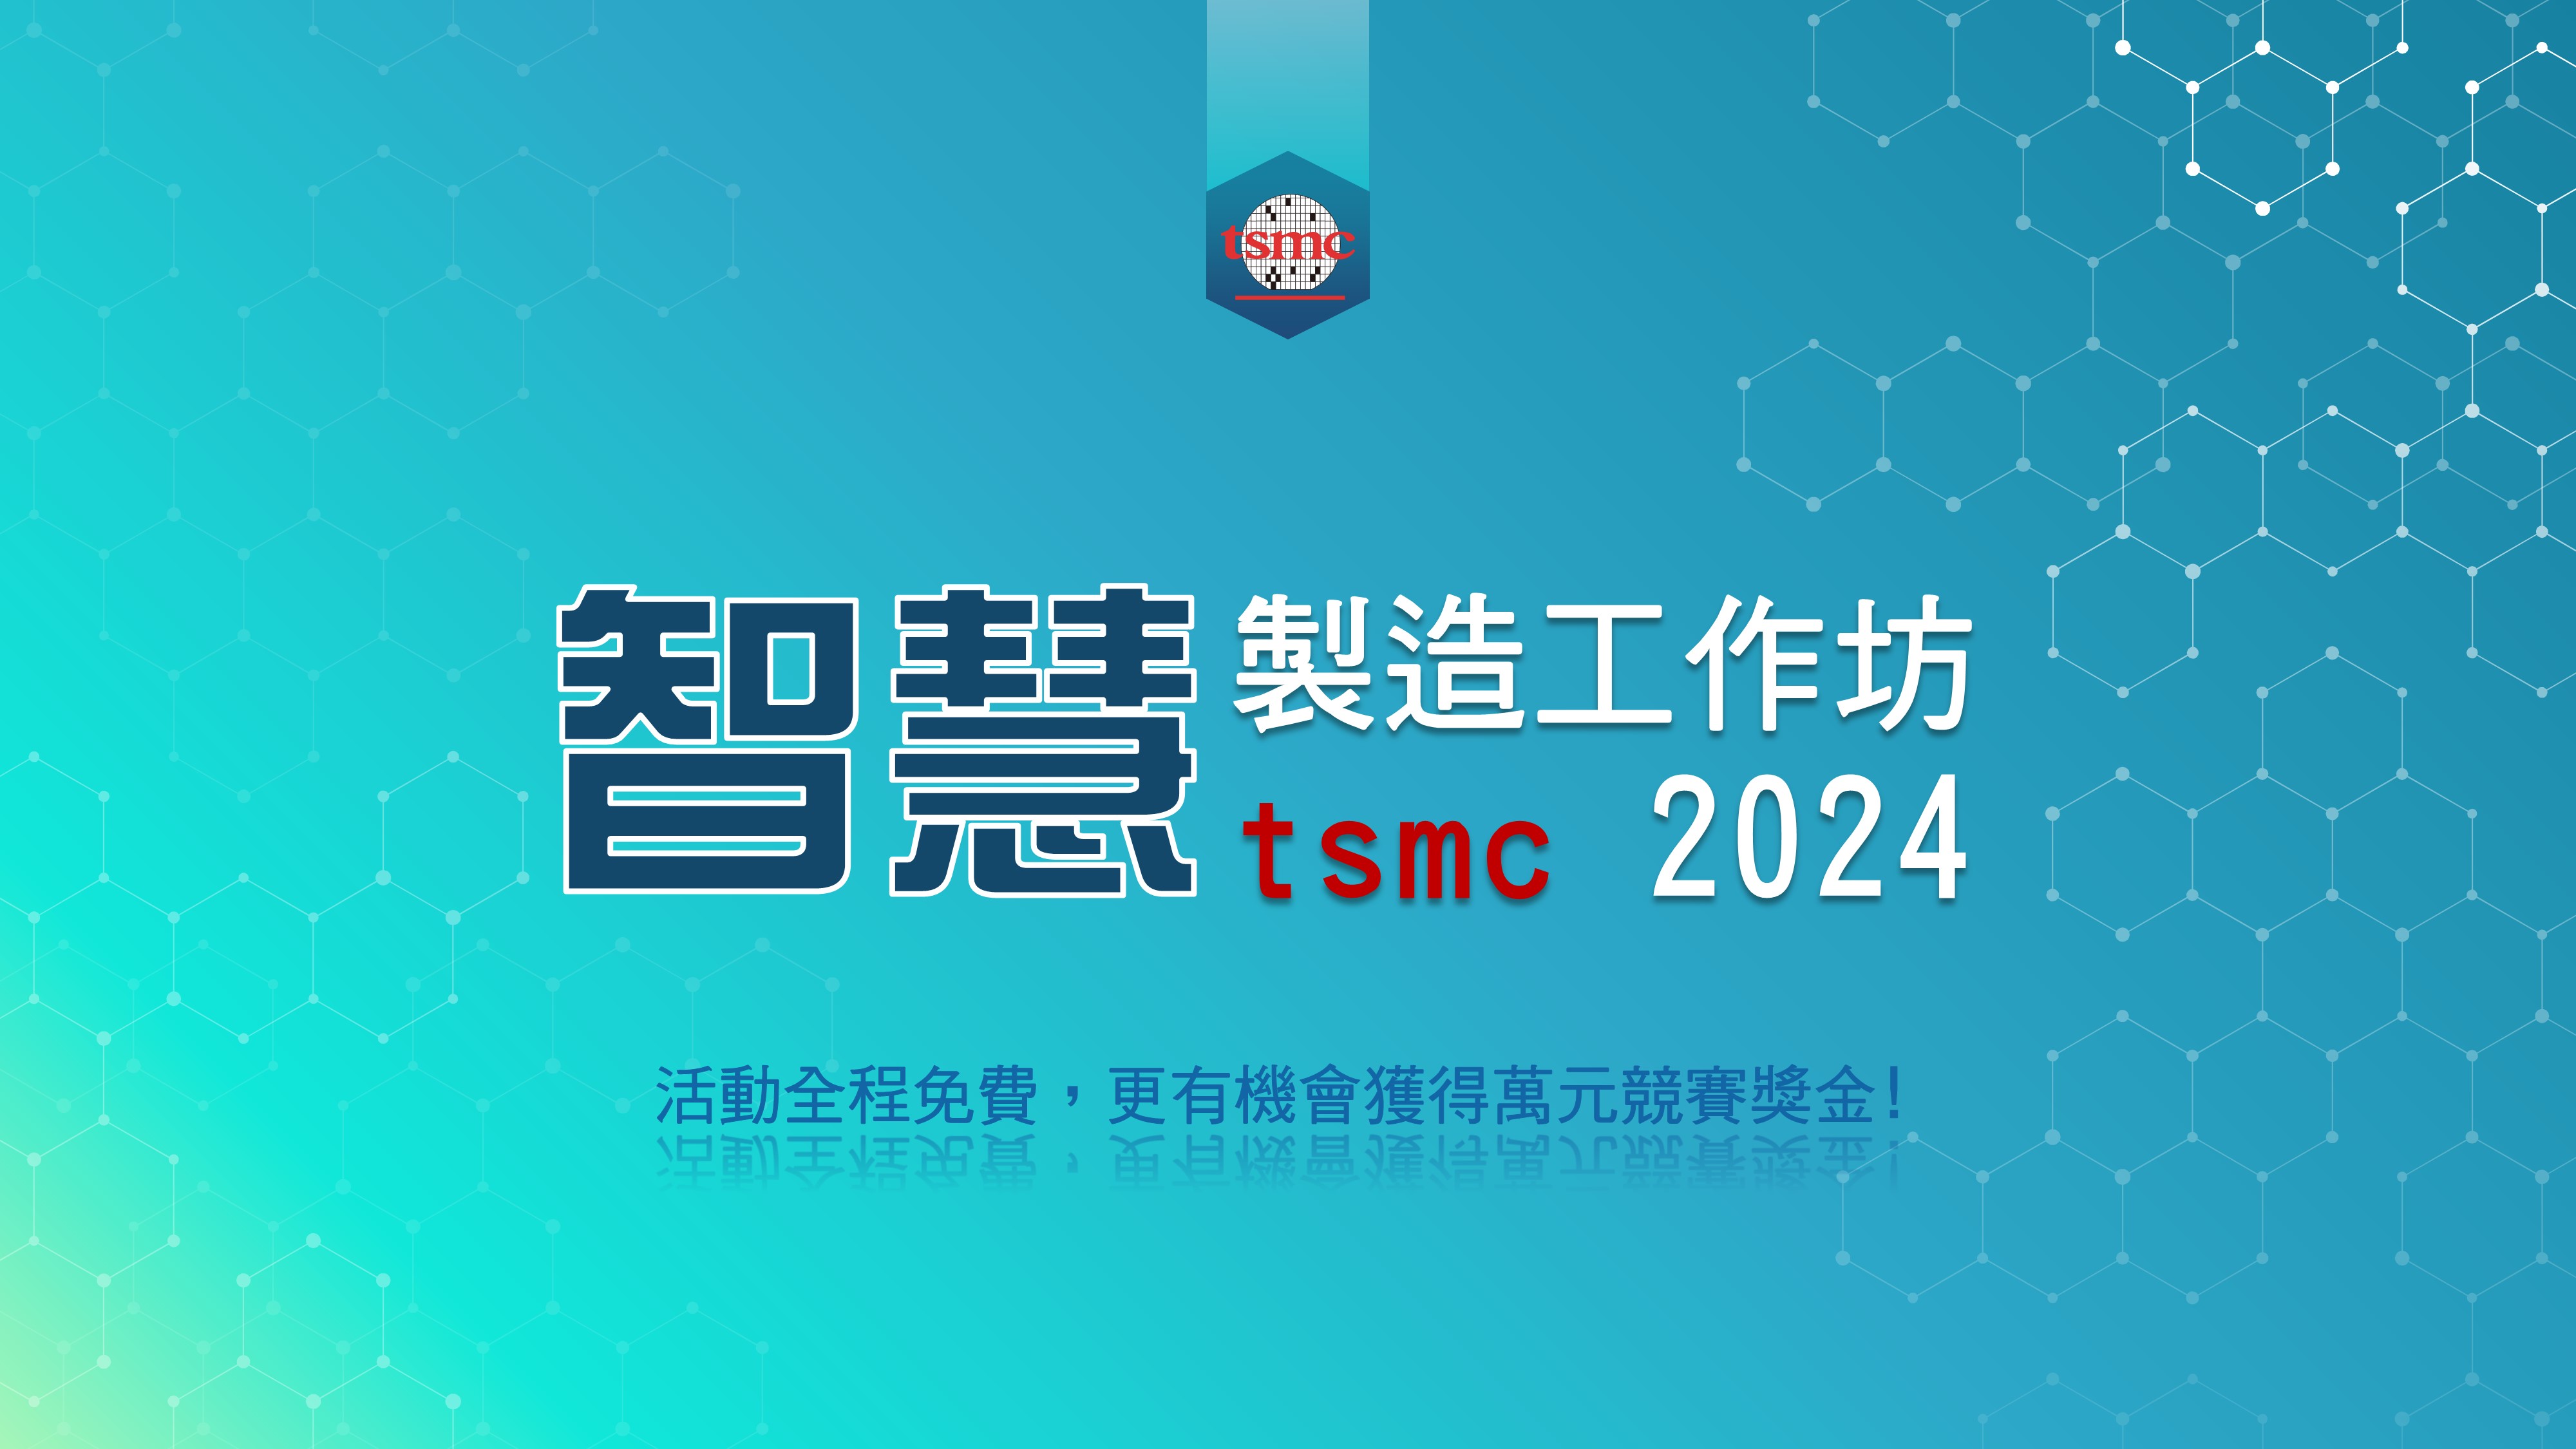 【TSMC 2024智慧製造工作坊】(竹科專場) 熱烈報名中 ! 